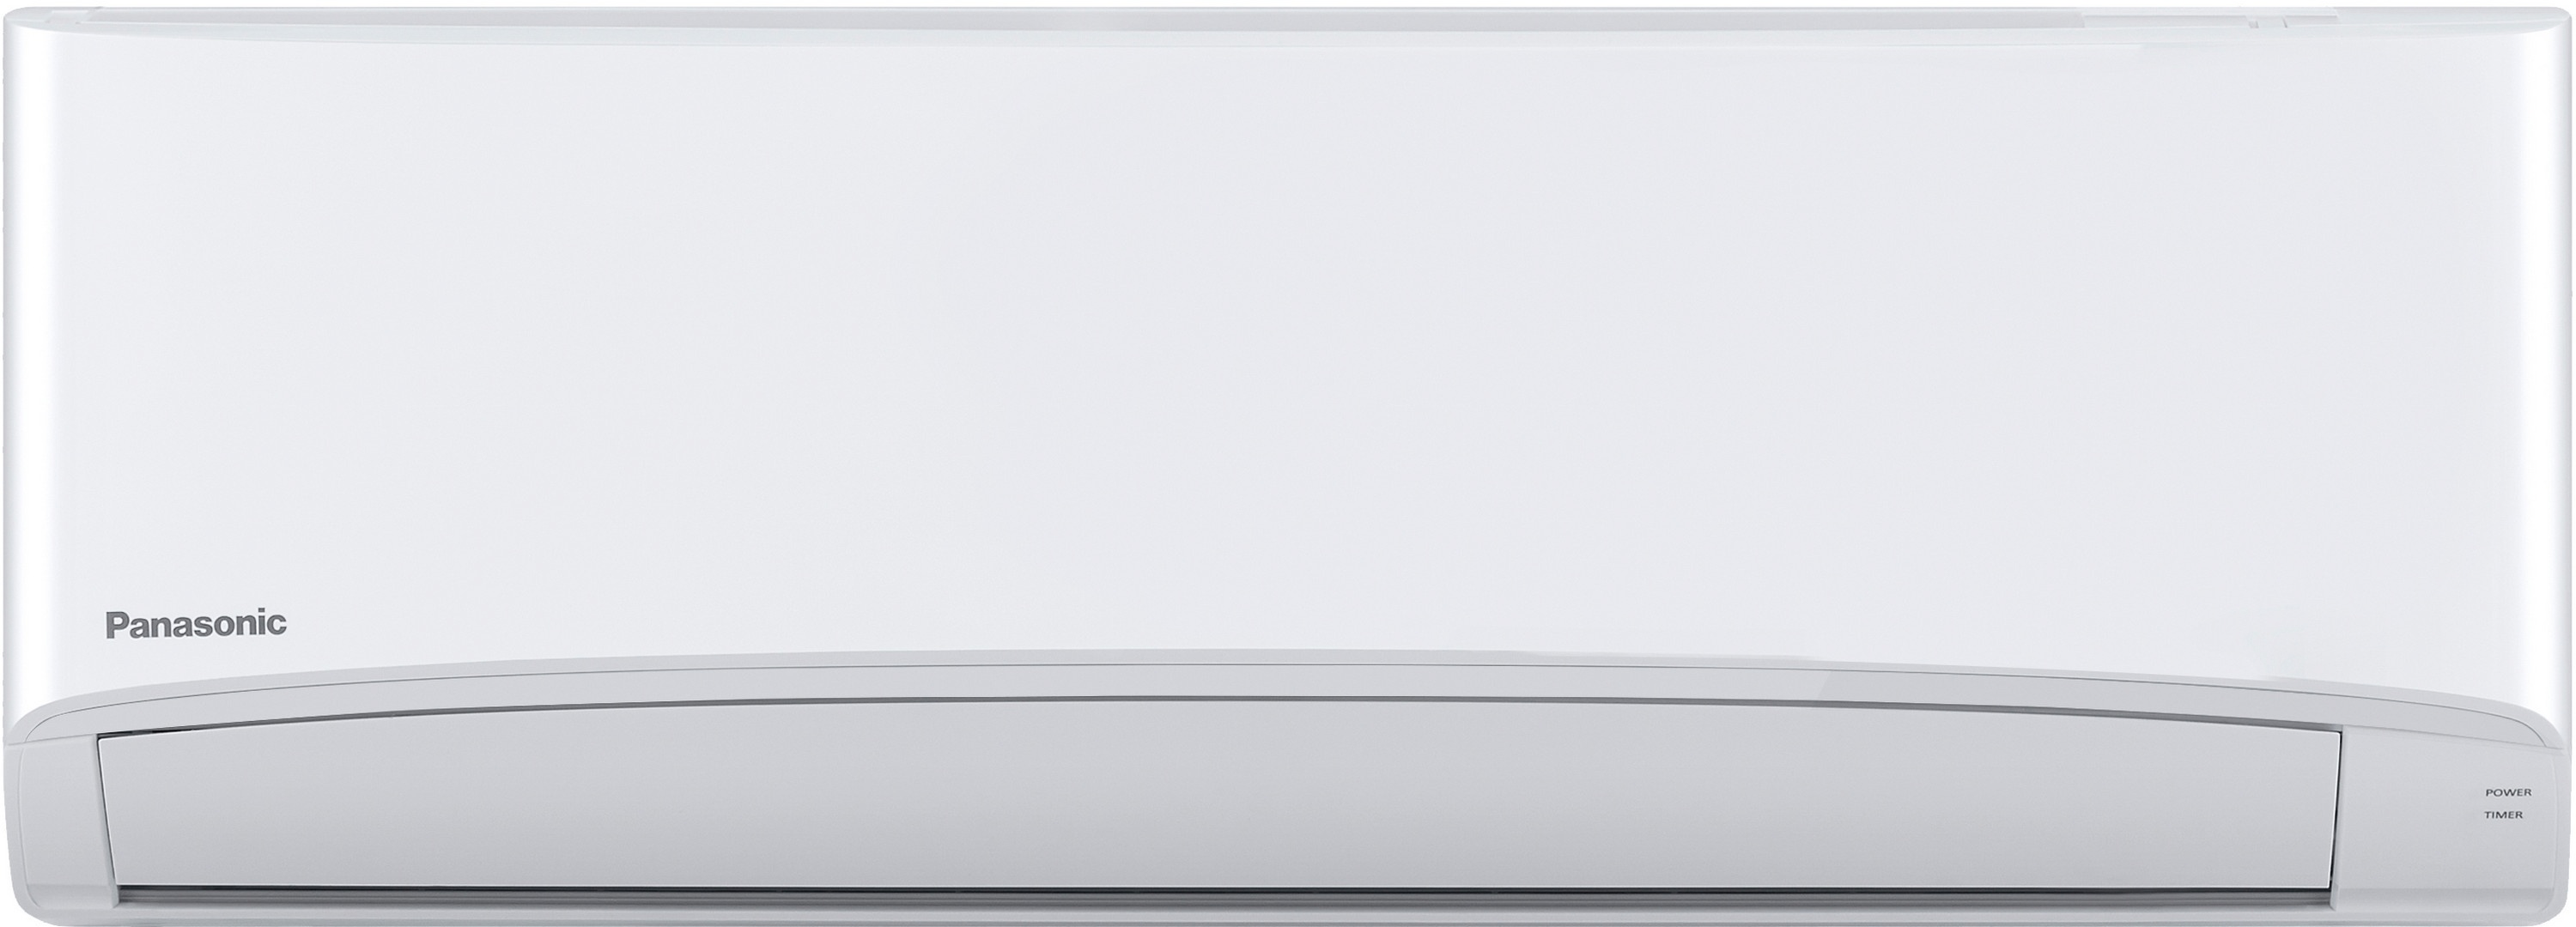 Кондиционер сплит-система Panasonic Compact Inverter CS/CU-TZ25TKEW-1 цена 33499.00 грн - фотография 2